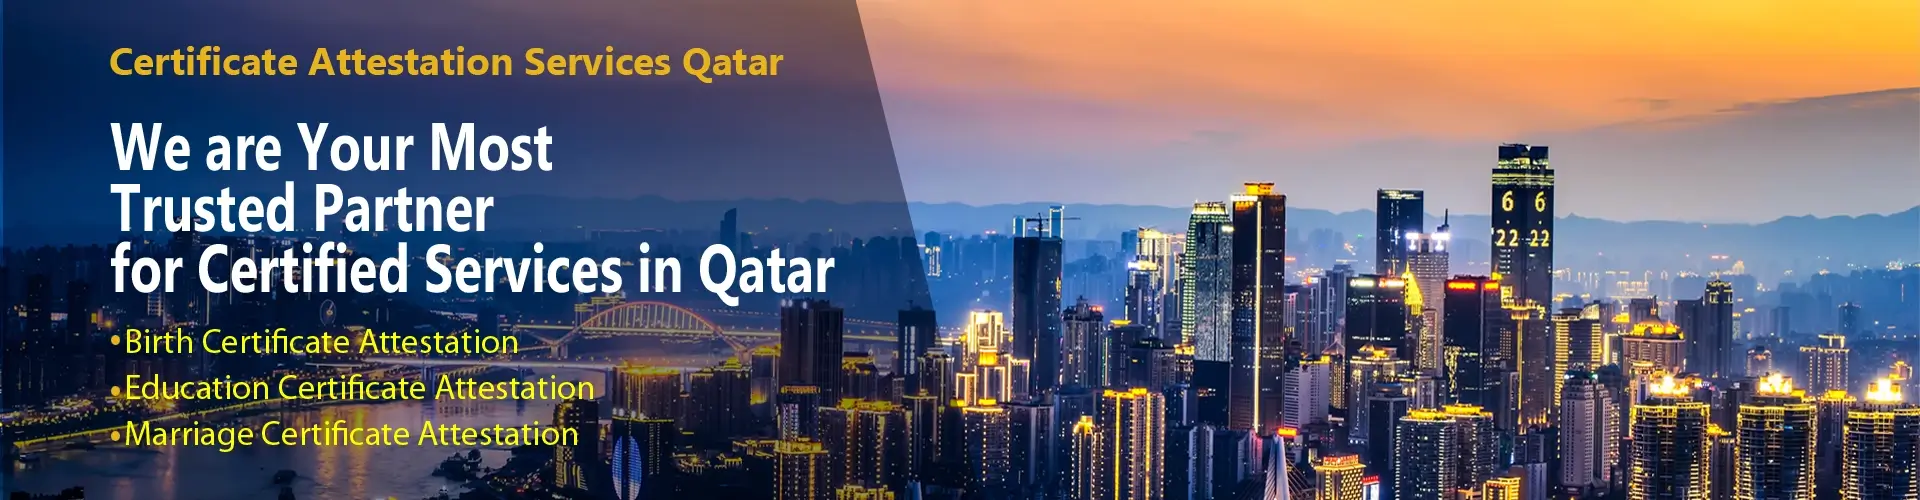 Qatar attestation